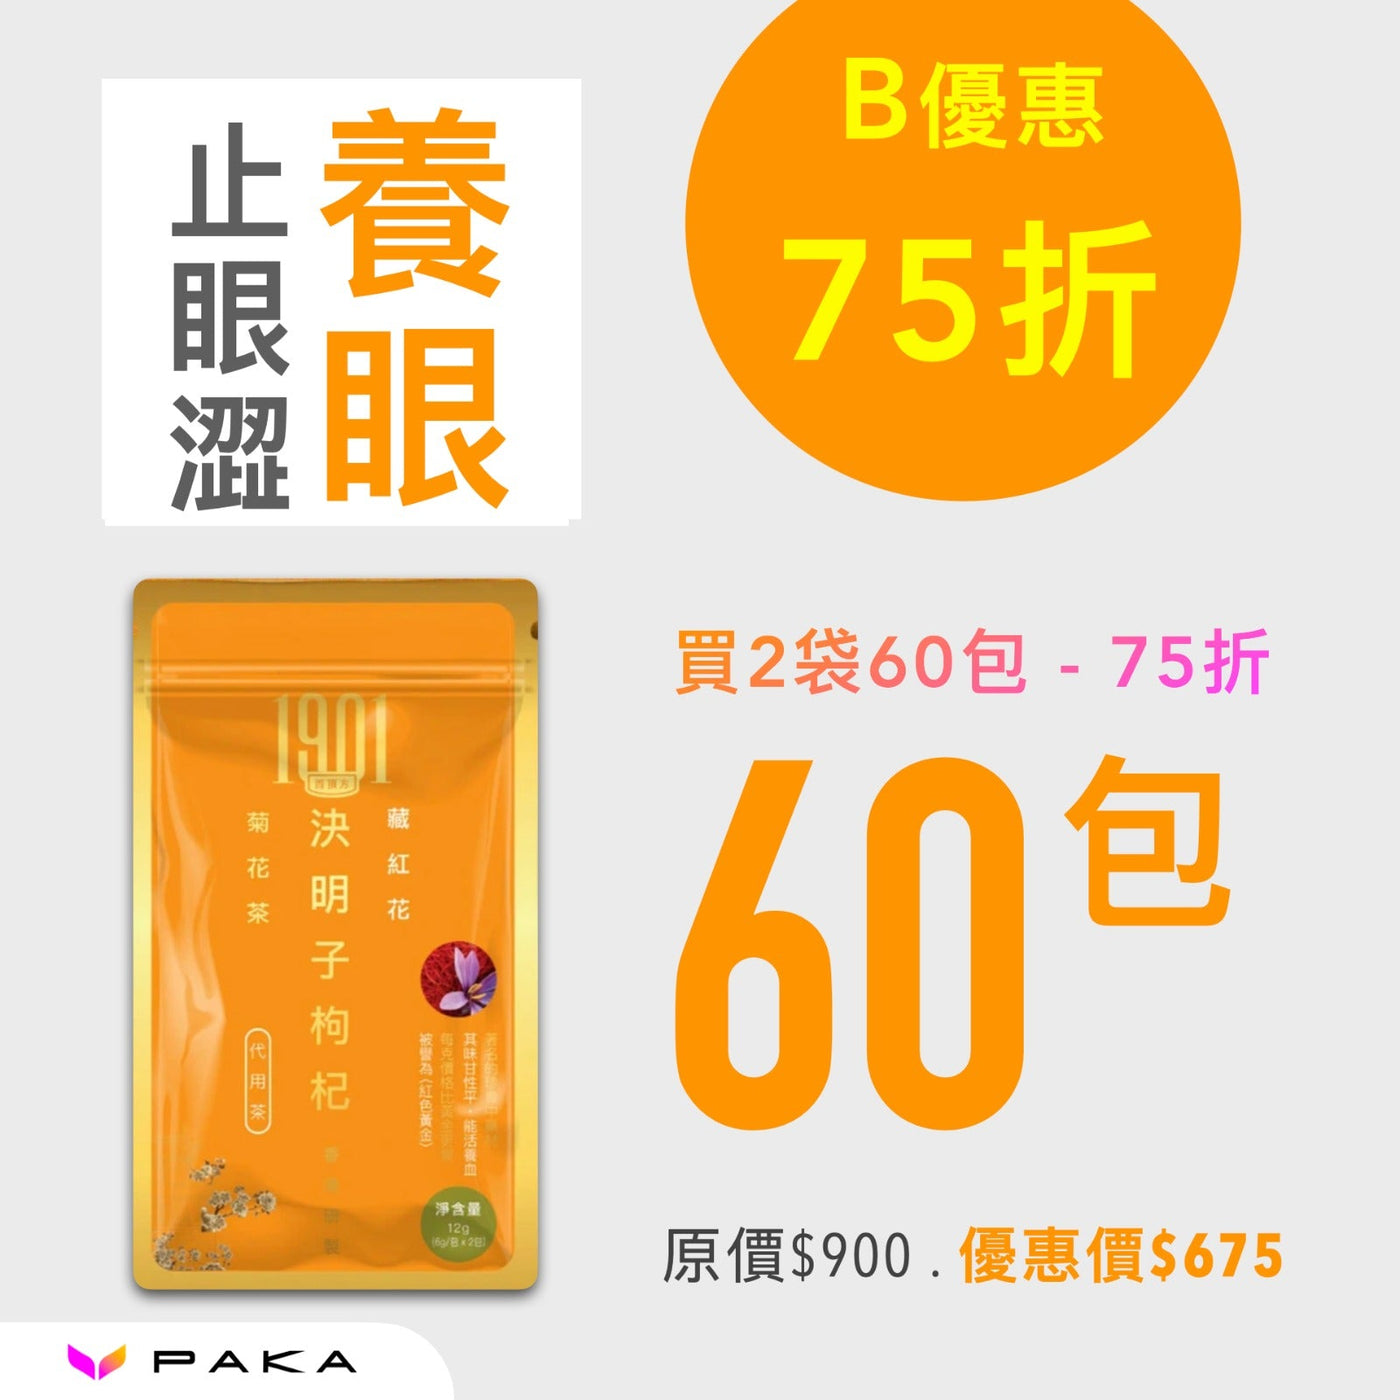 SALE: 養眼茶療 - 決明子枸杞菊花茶 Functional Tea 1901 60包 75折 